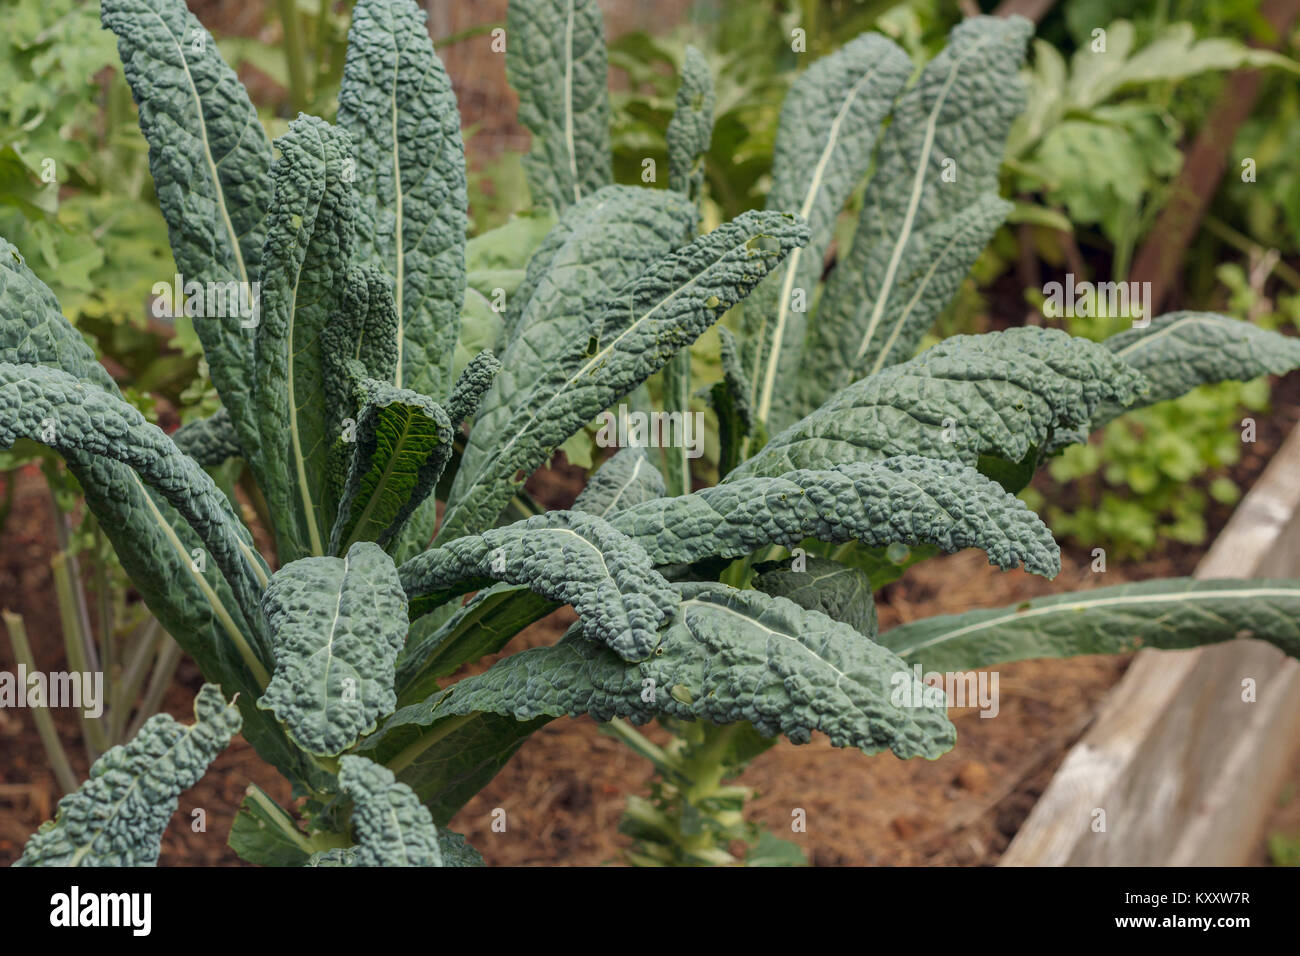 Tall, organic Tuscan kale (AKA Lacinato or Dinosaur kale) grows in a raised bed in a backyard food garden. Stock Photo